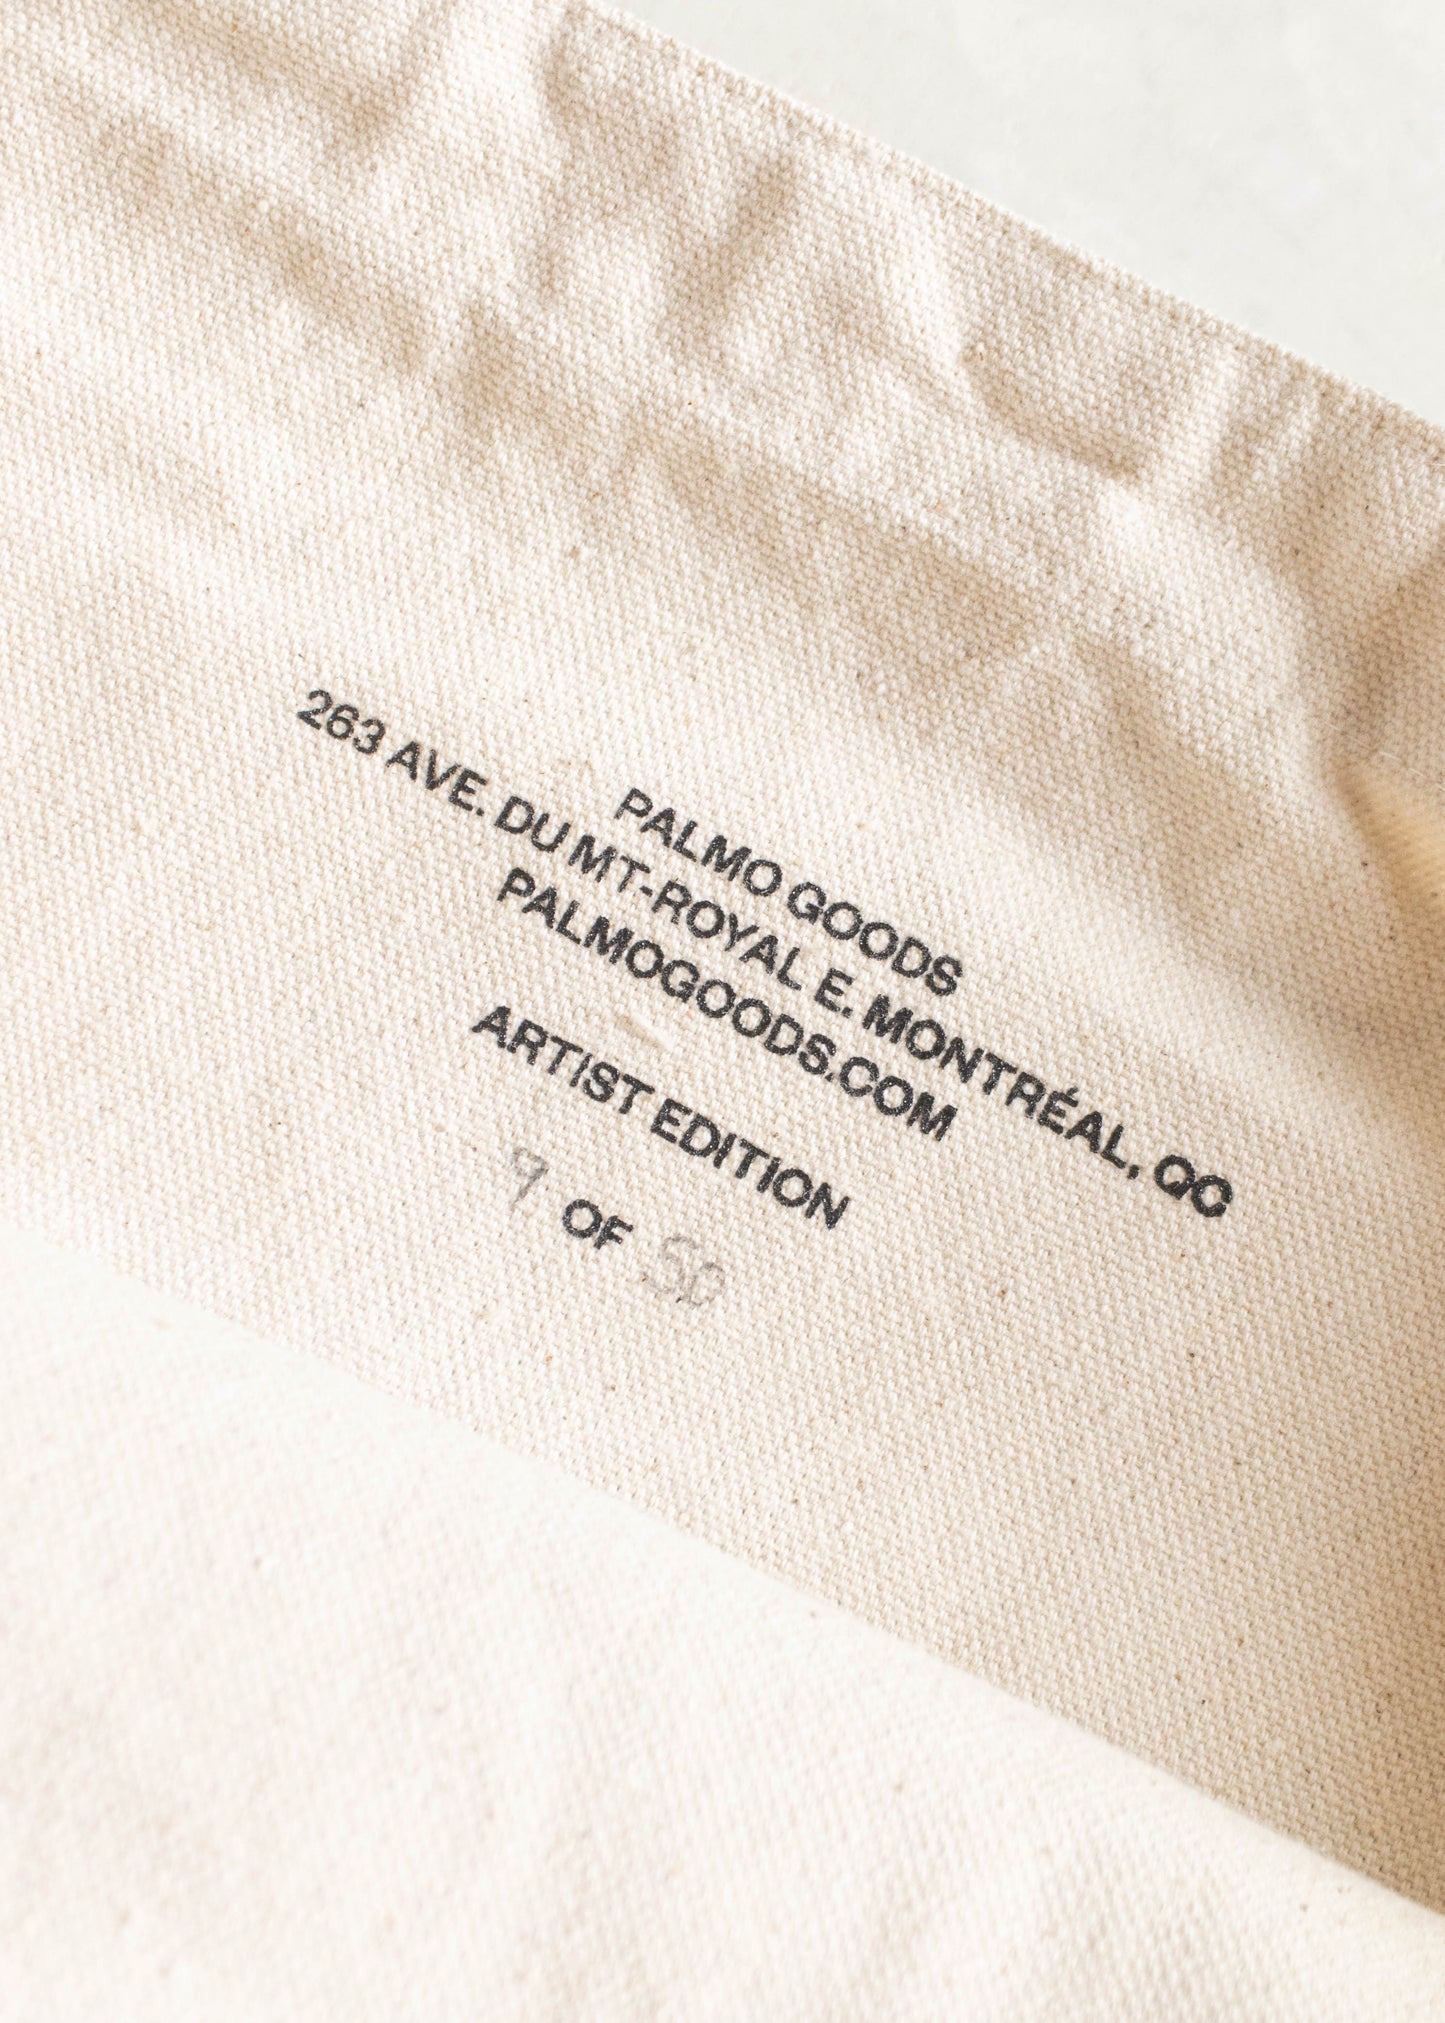 Nick Oaks X Palmo Goods Artist Edition Tote Bag